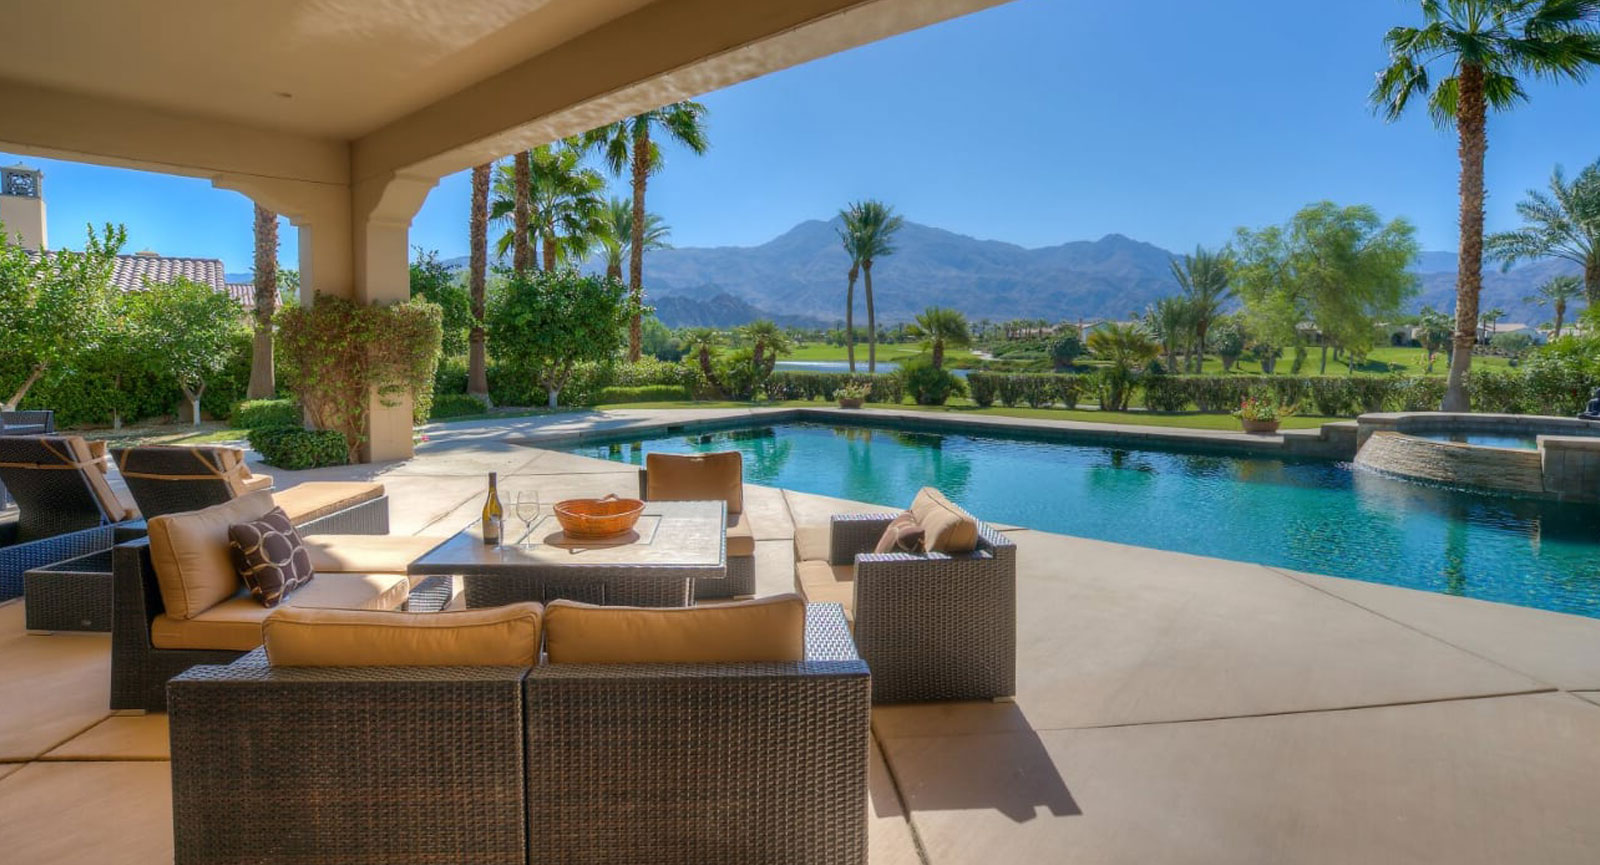 Vacation Home Rentals at Coachella Valley